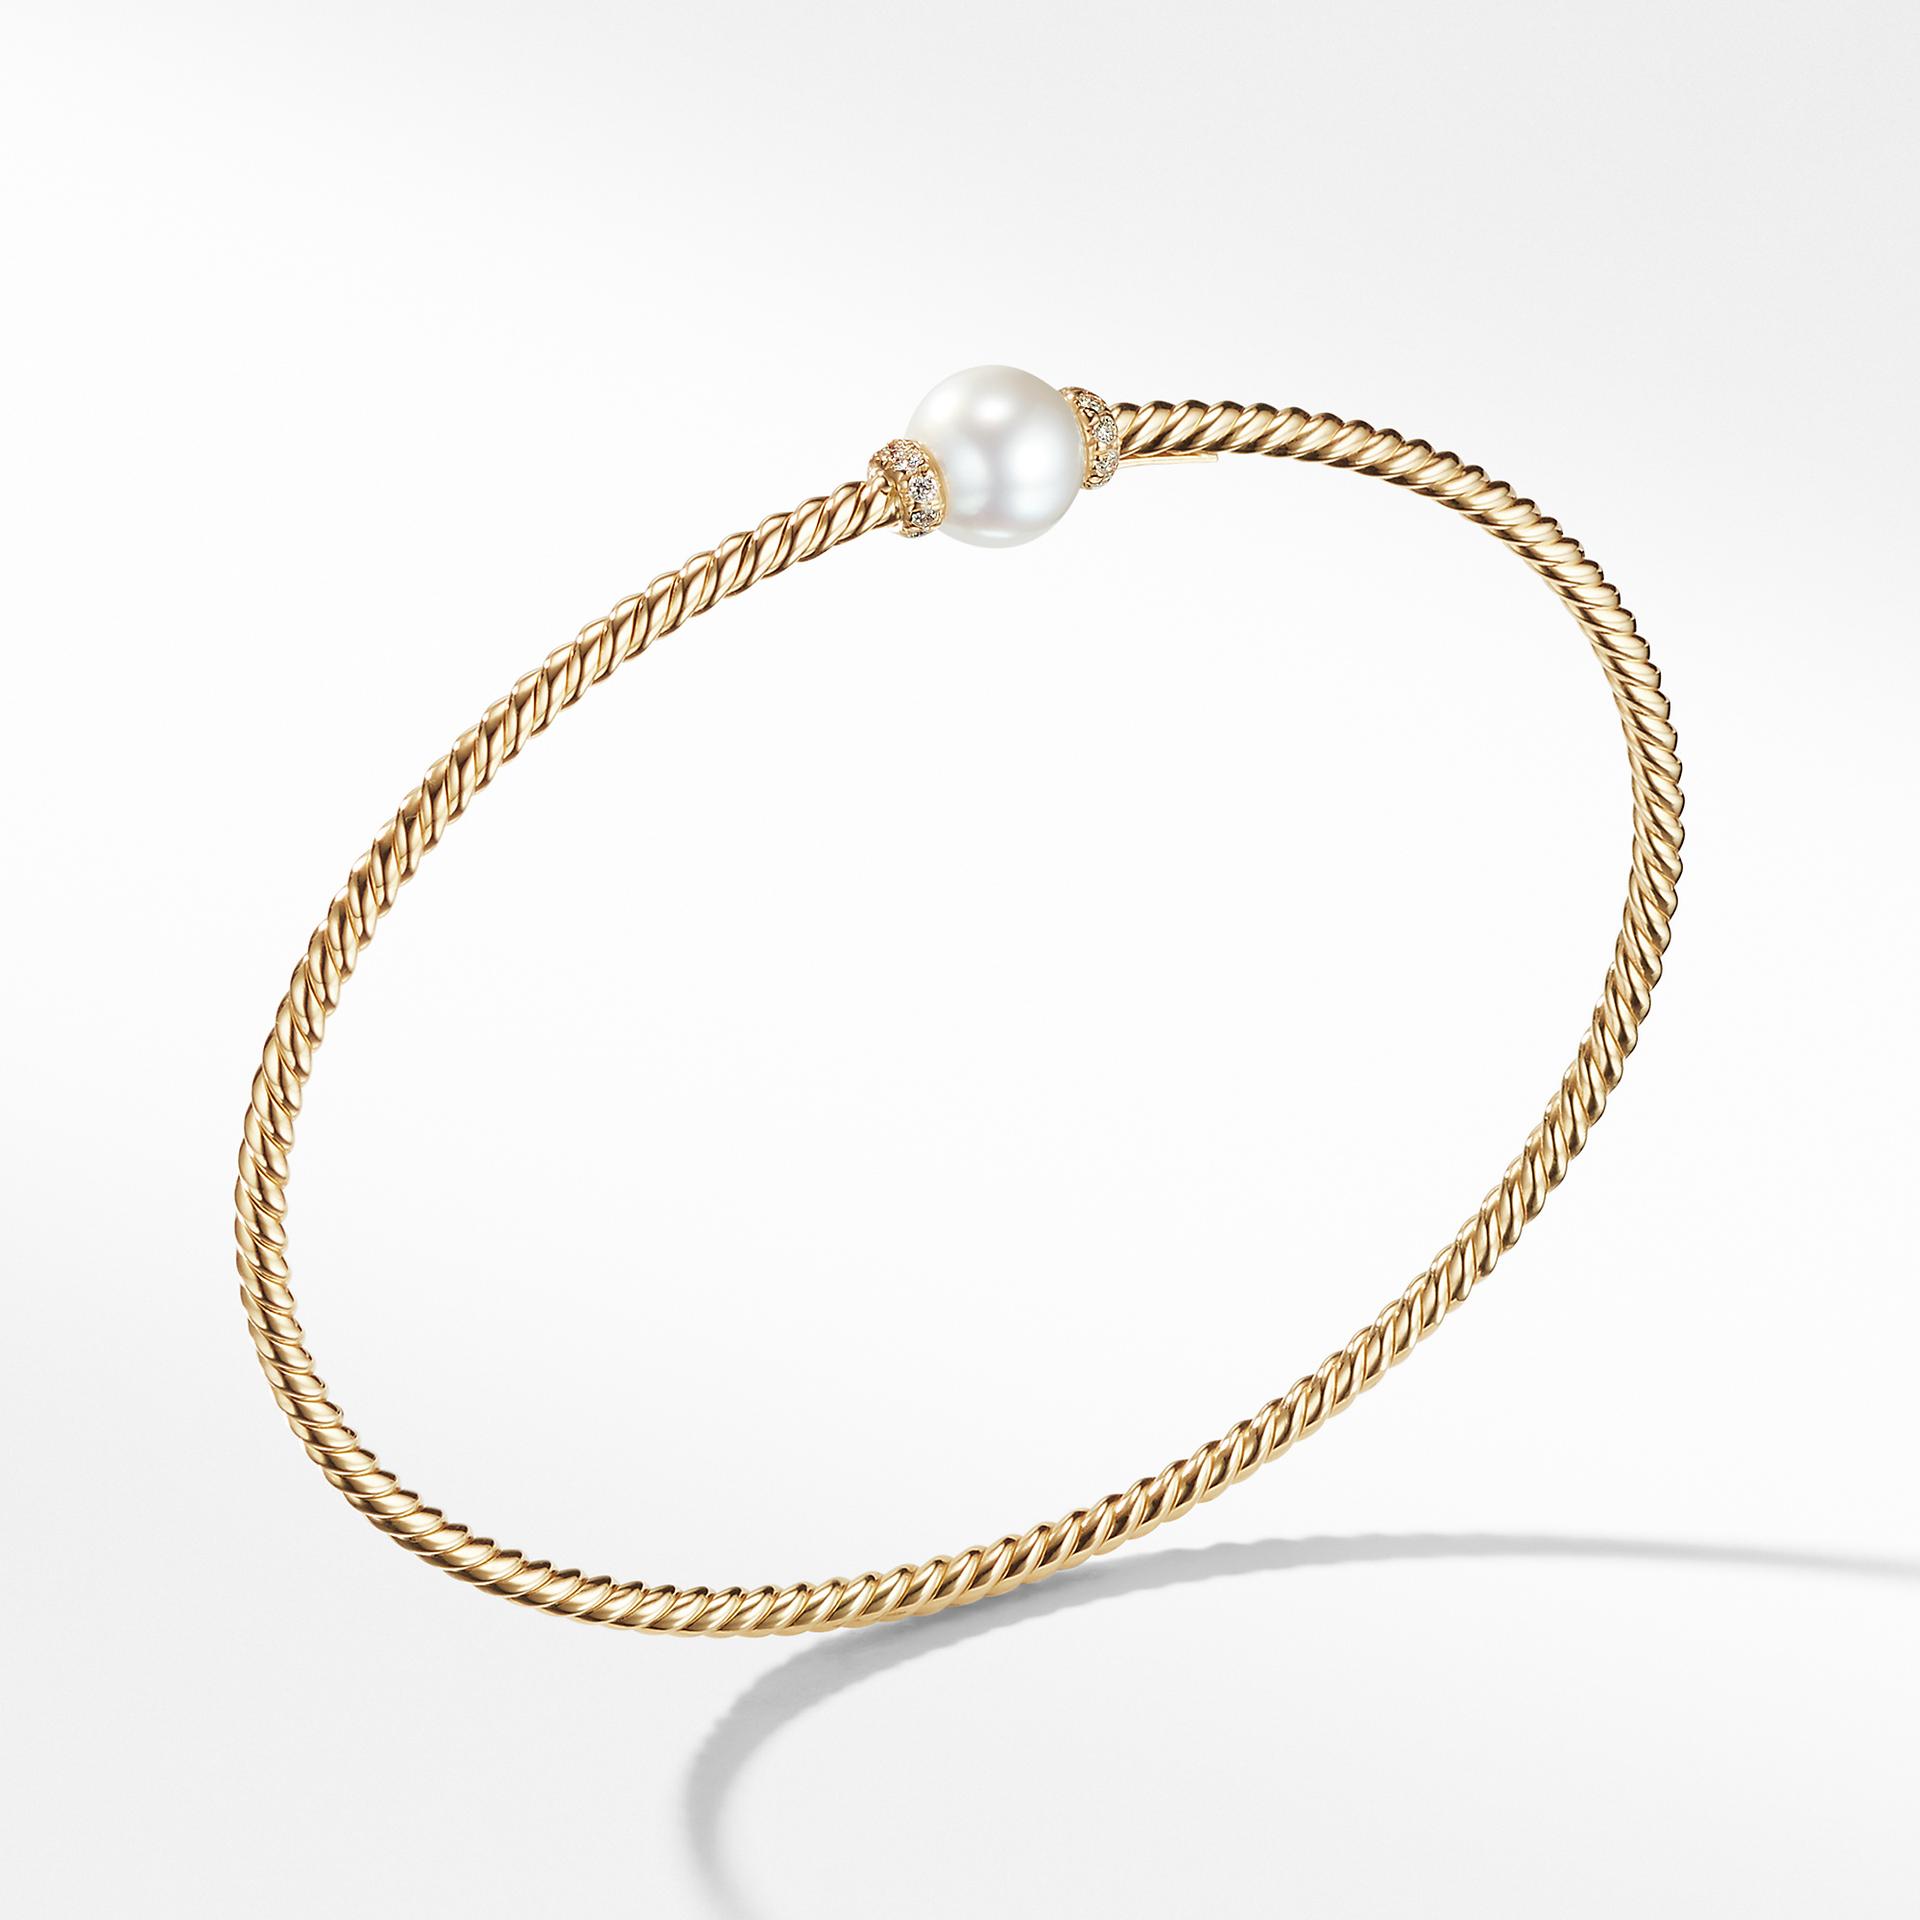 David Yurman Petite Solari Station Bracelet with Cultured Pearl and Diamonds in 18K Gold 0